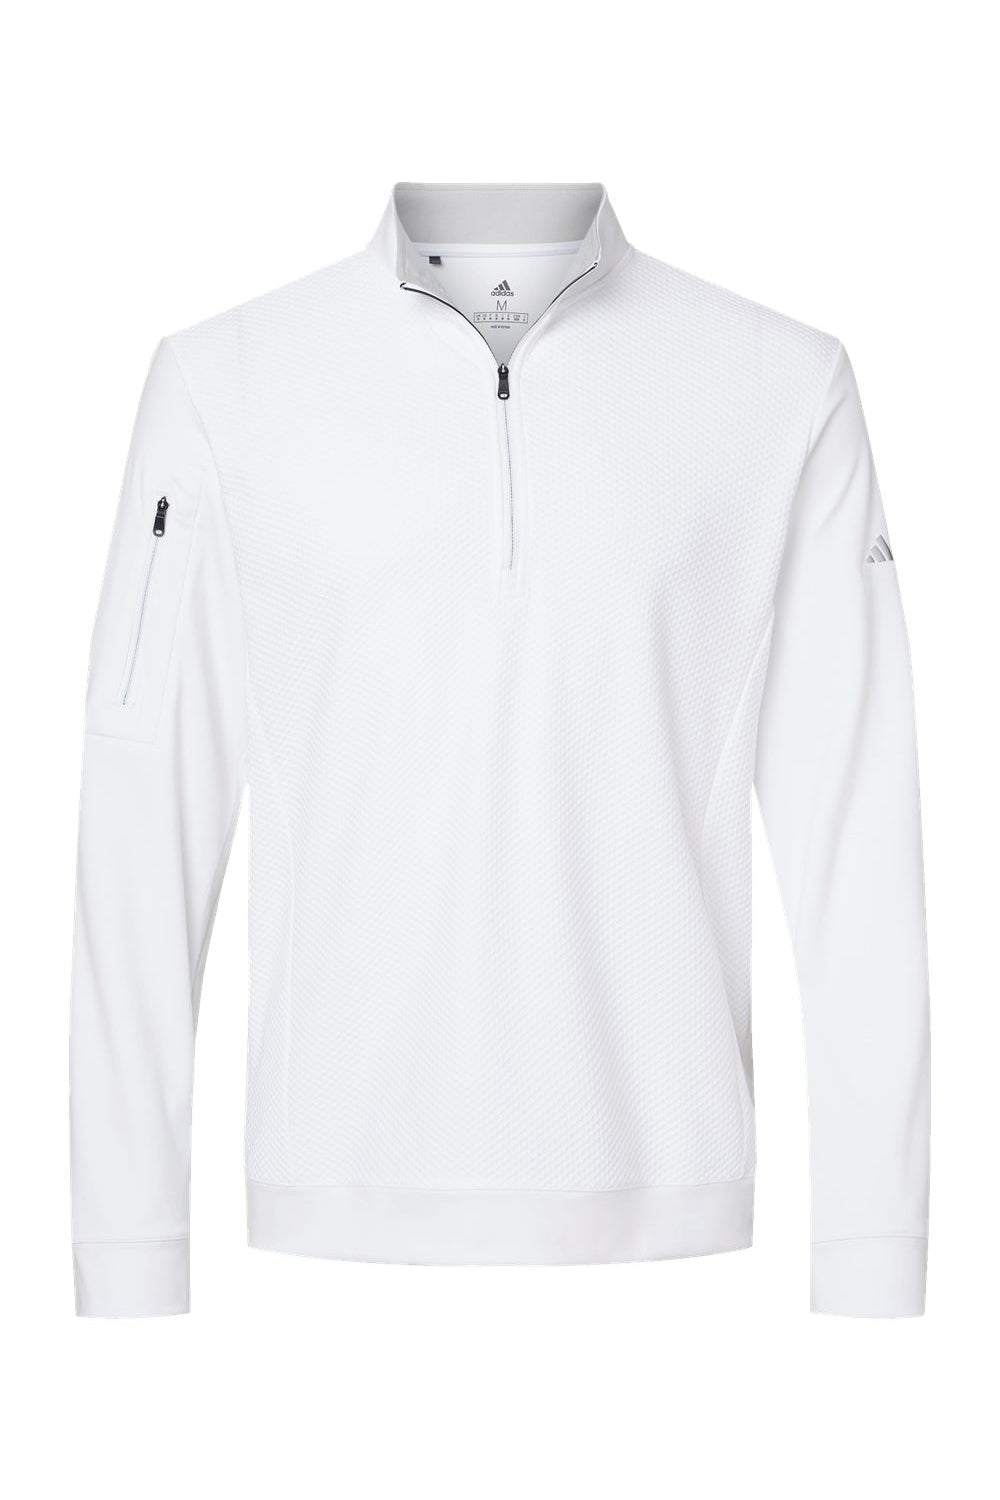 Adidas A295 Mens Performance UPF 50+ 1/4 Zip Sweatshirt White Flat Front